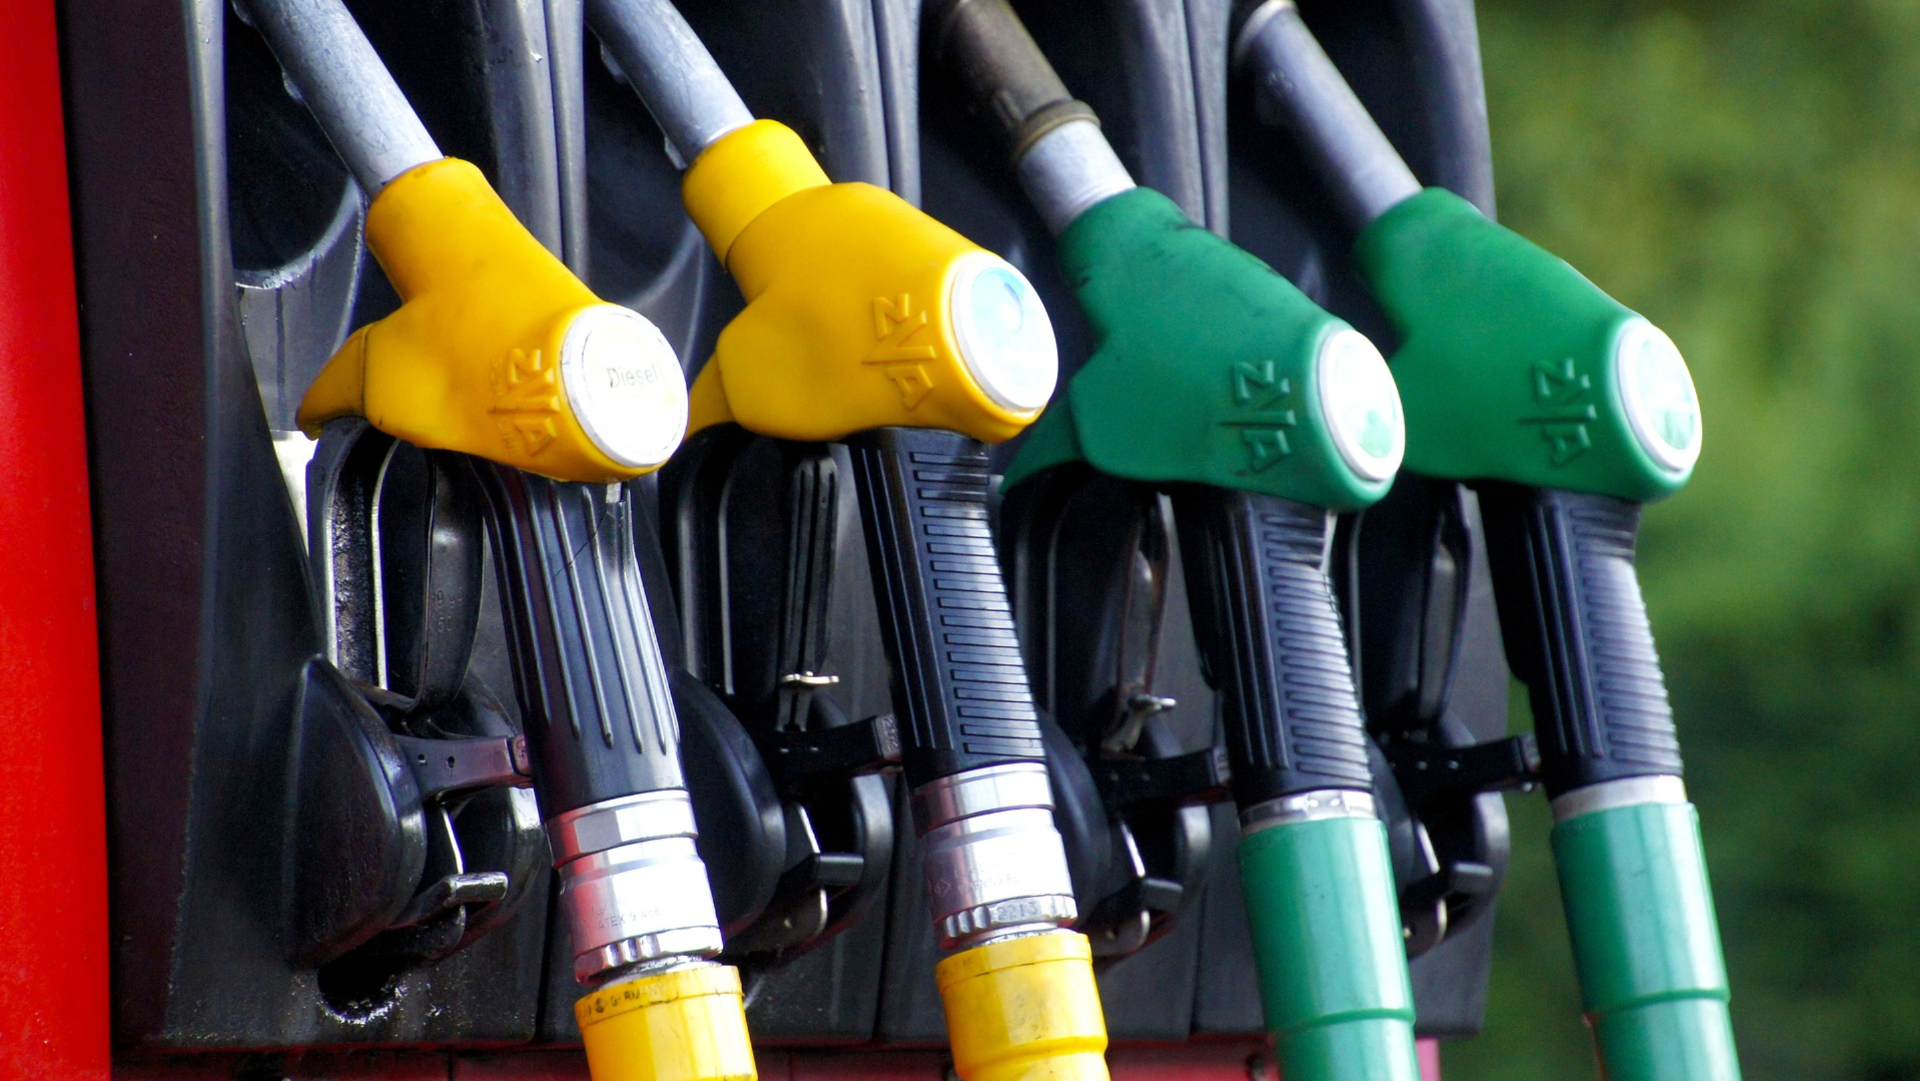 gorivo pumpa benzin dizel crpka foto pixabay.jpg